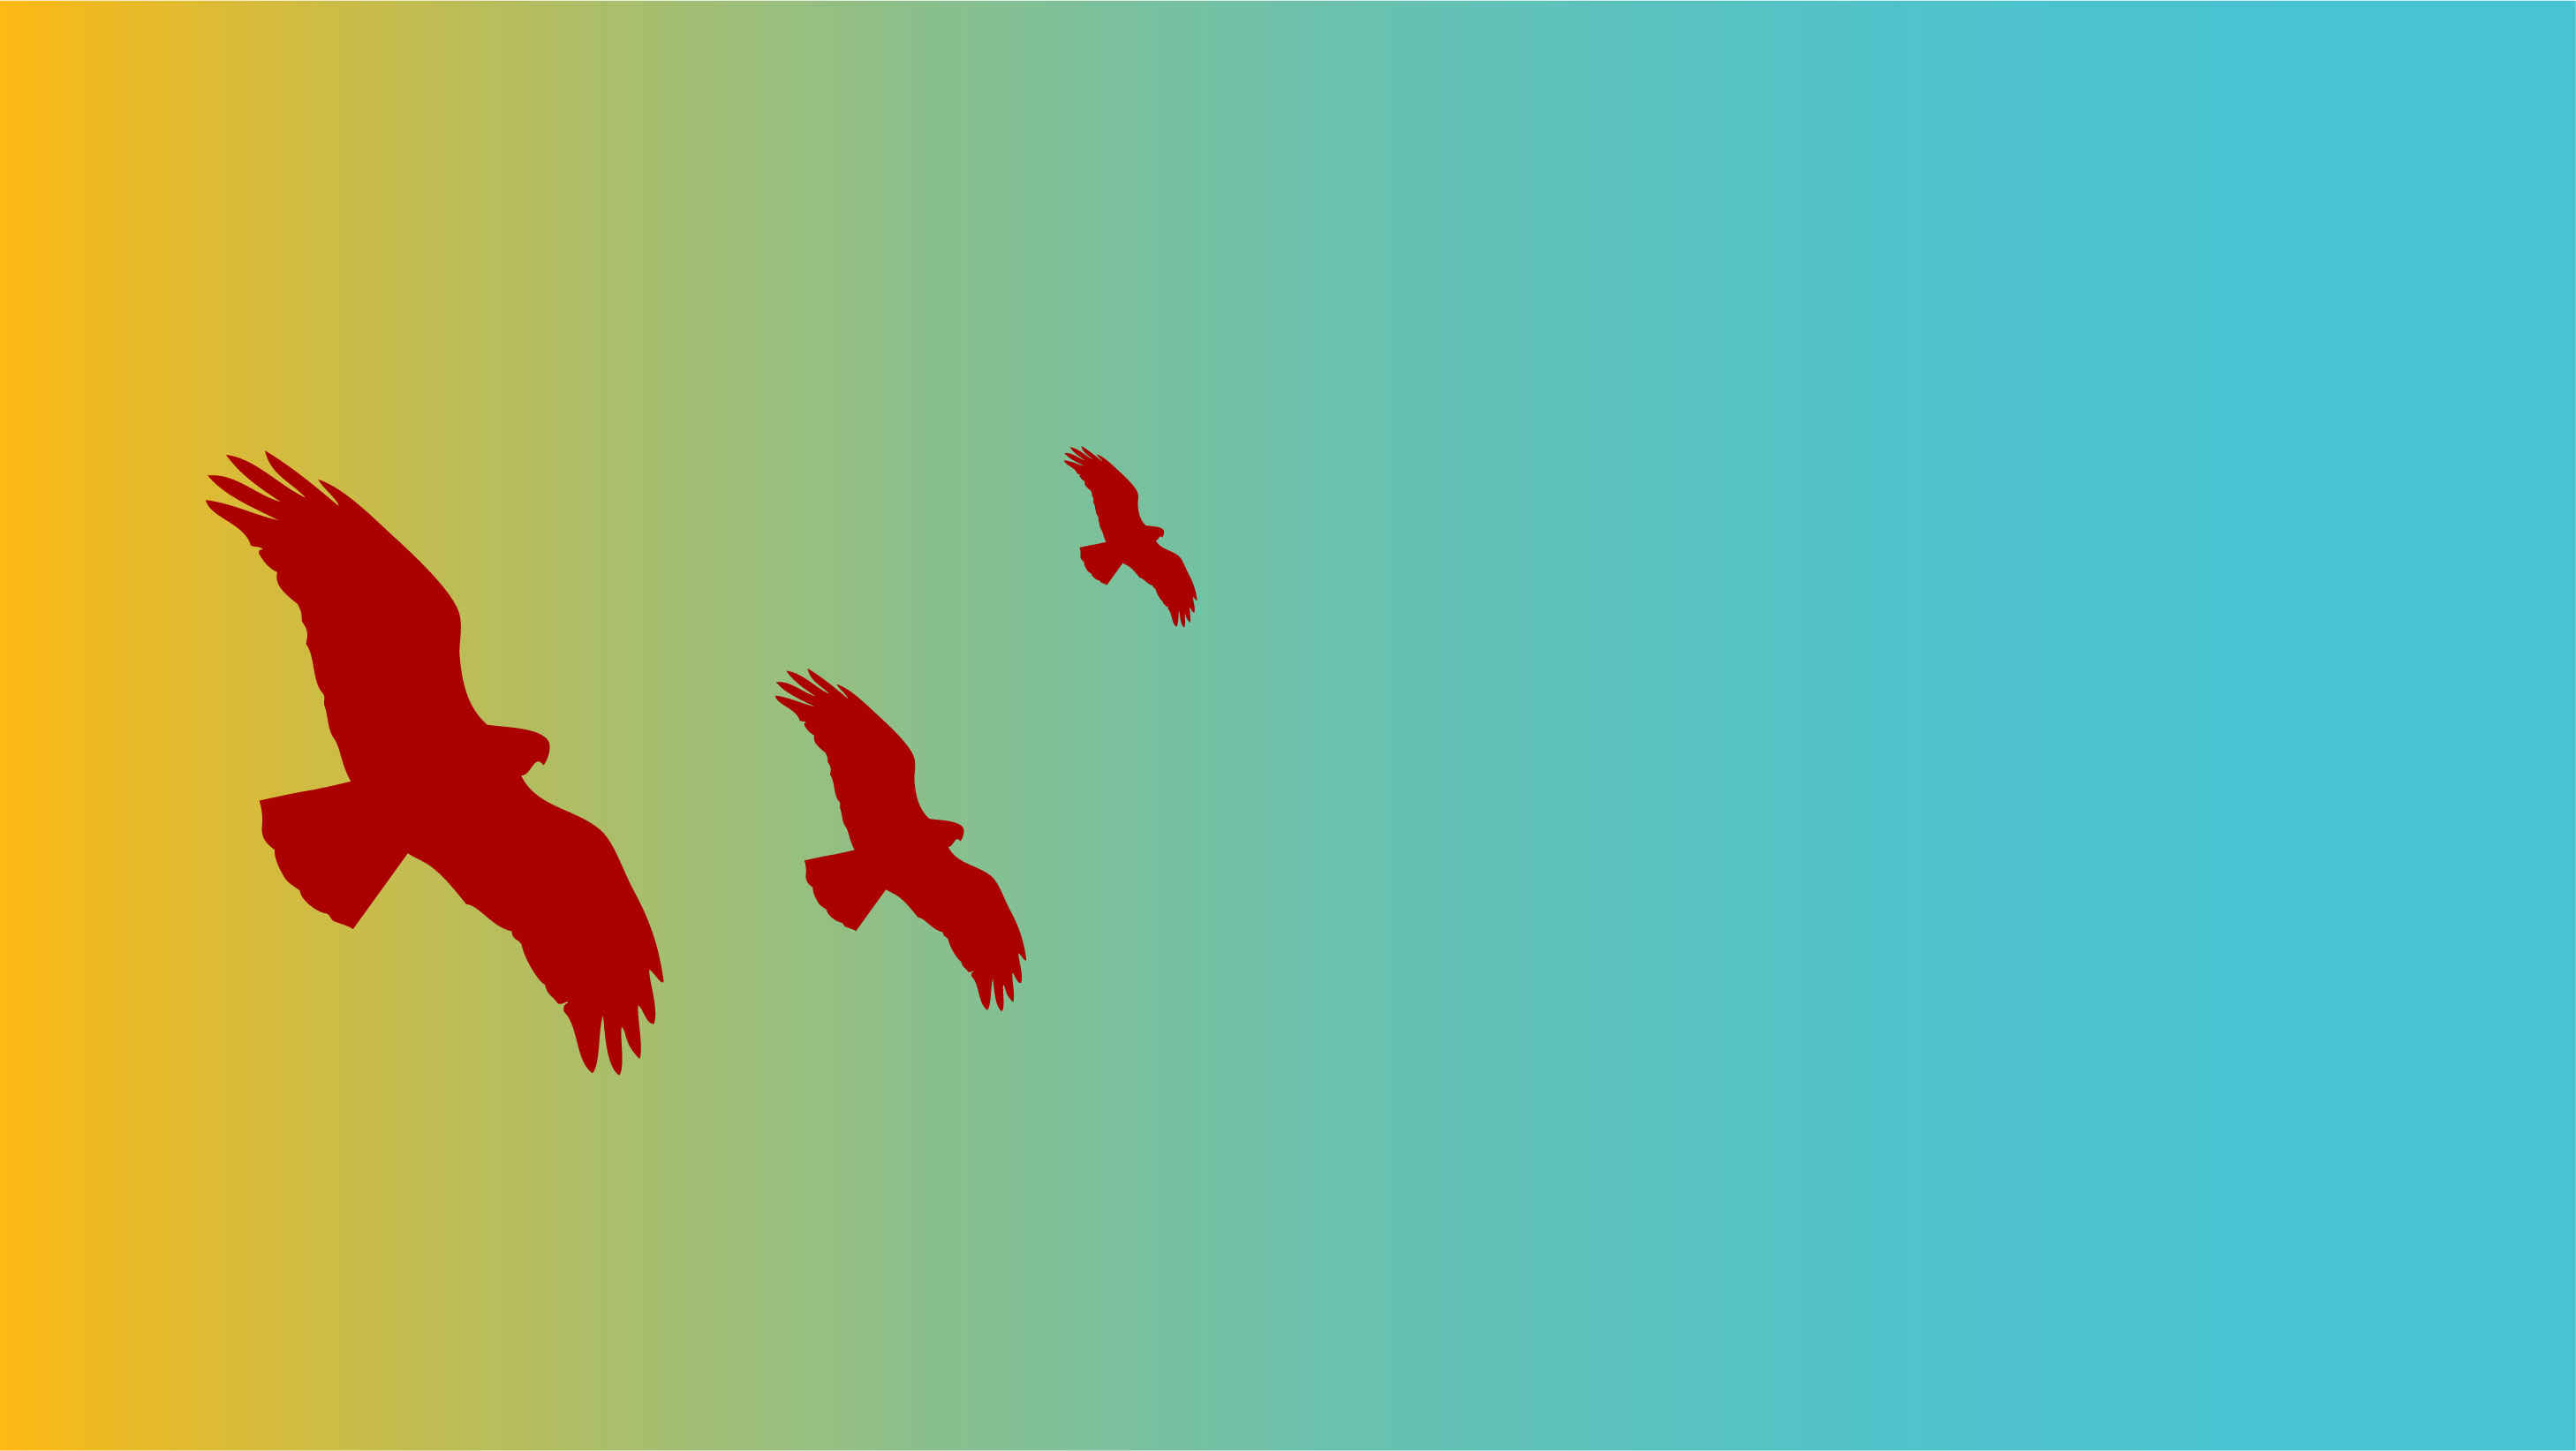 Redhawk birds in flight